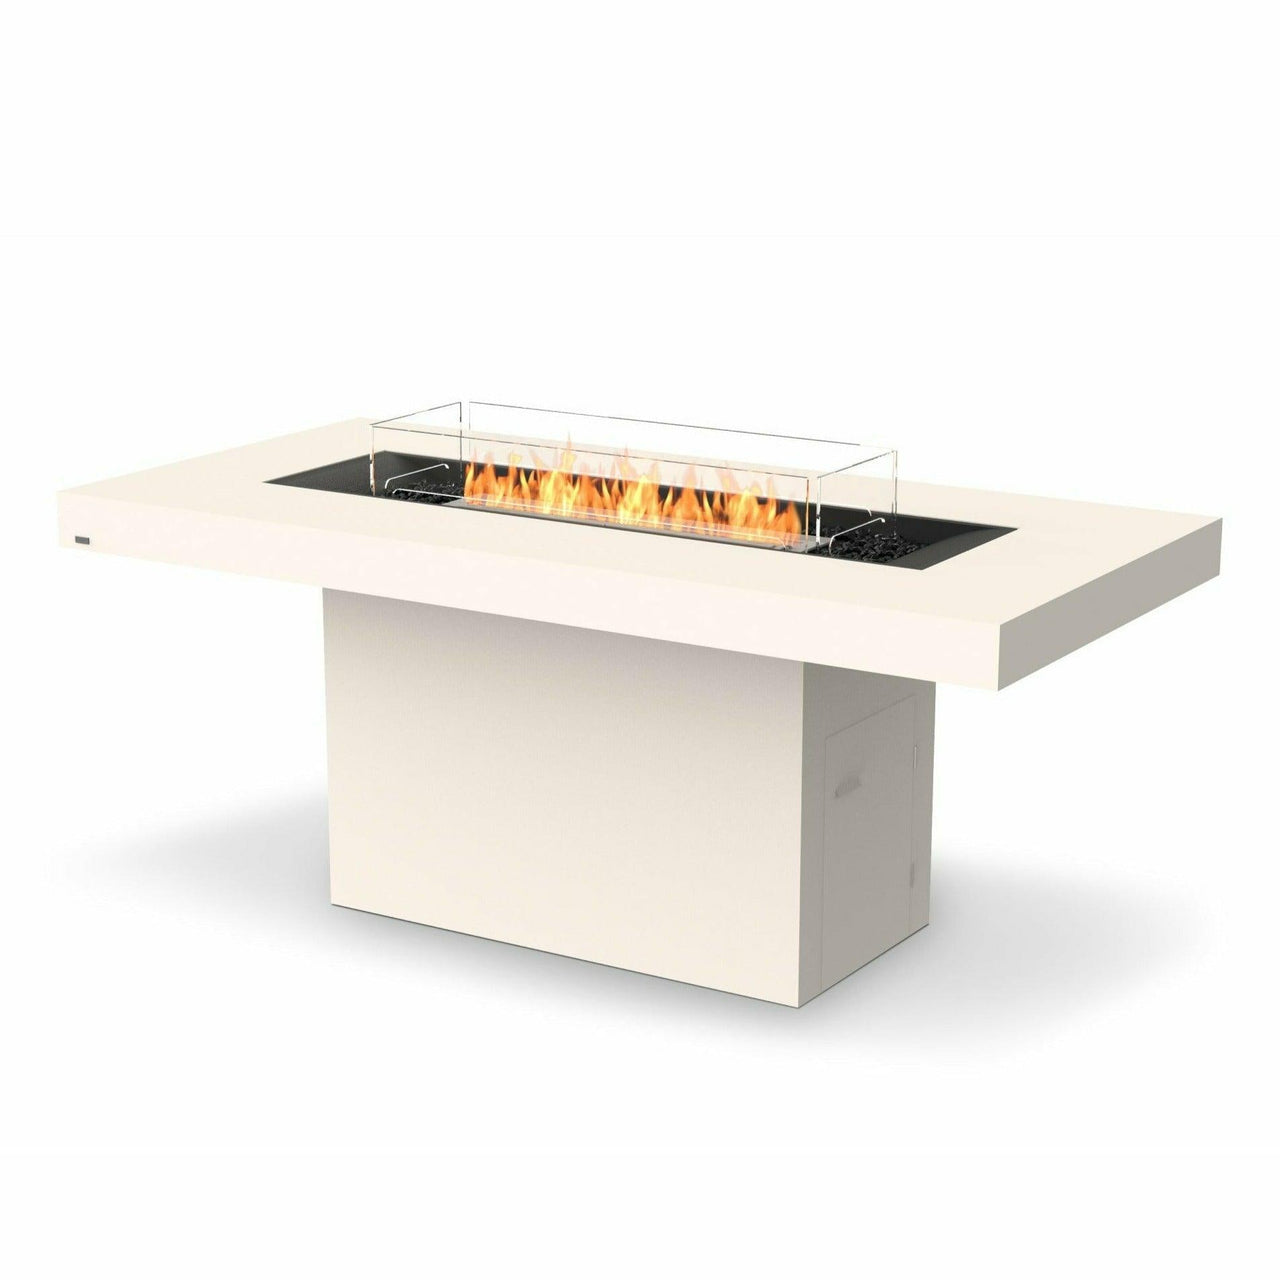 EcoSmart Fire - Gin 90" (Bar) Rectangular Concrete Fire Pit Table - Fire Pit Stock